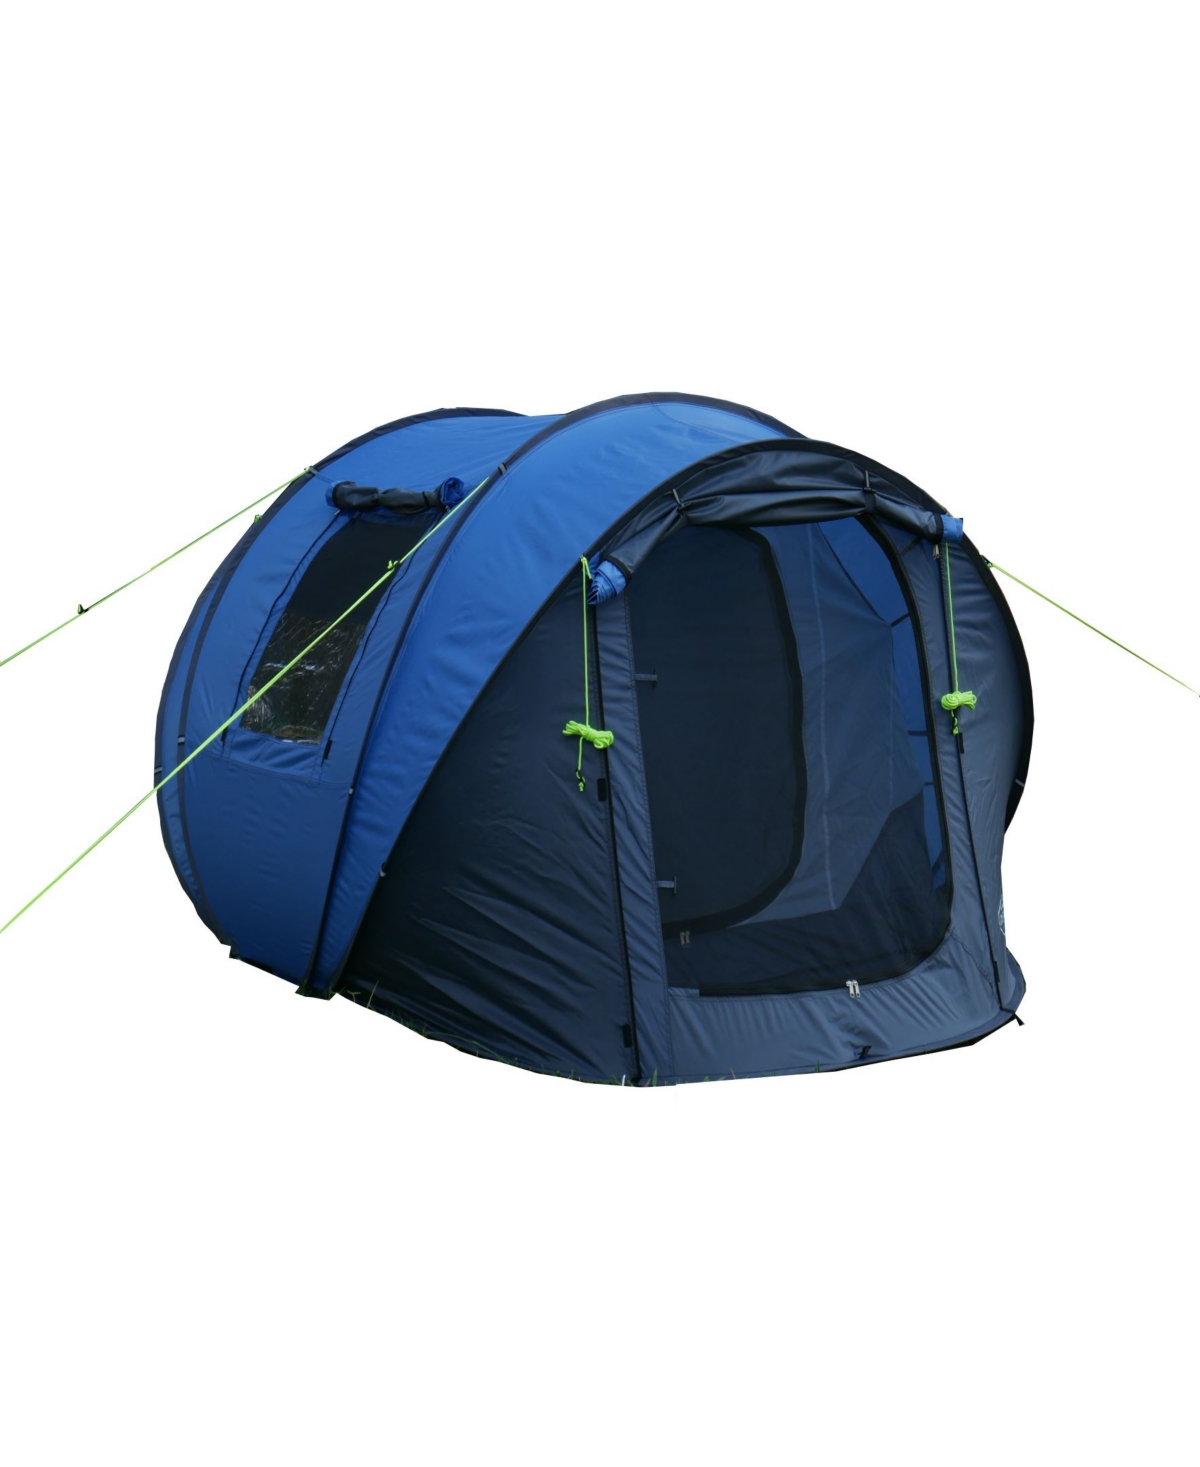 Kamp-rite Kwik Tent Automatic Pop-up Tent In Navy Blue